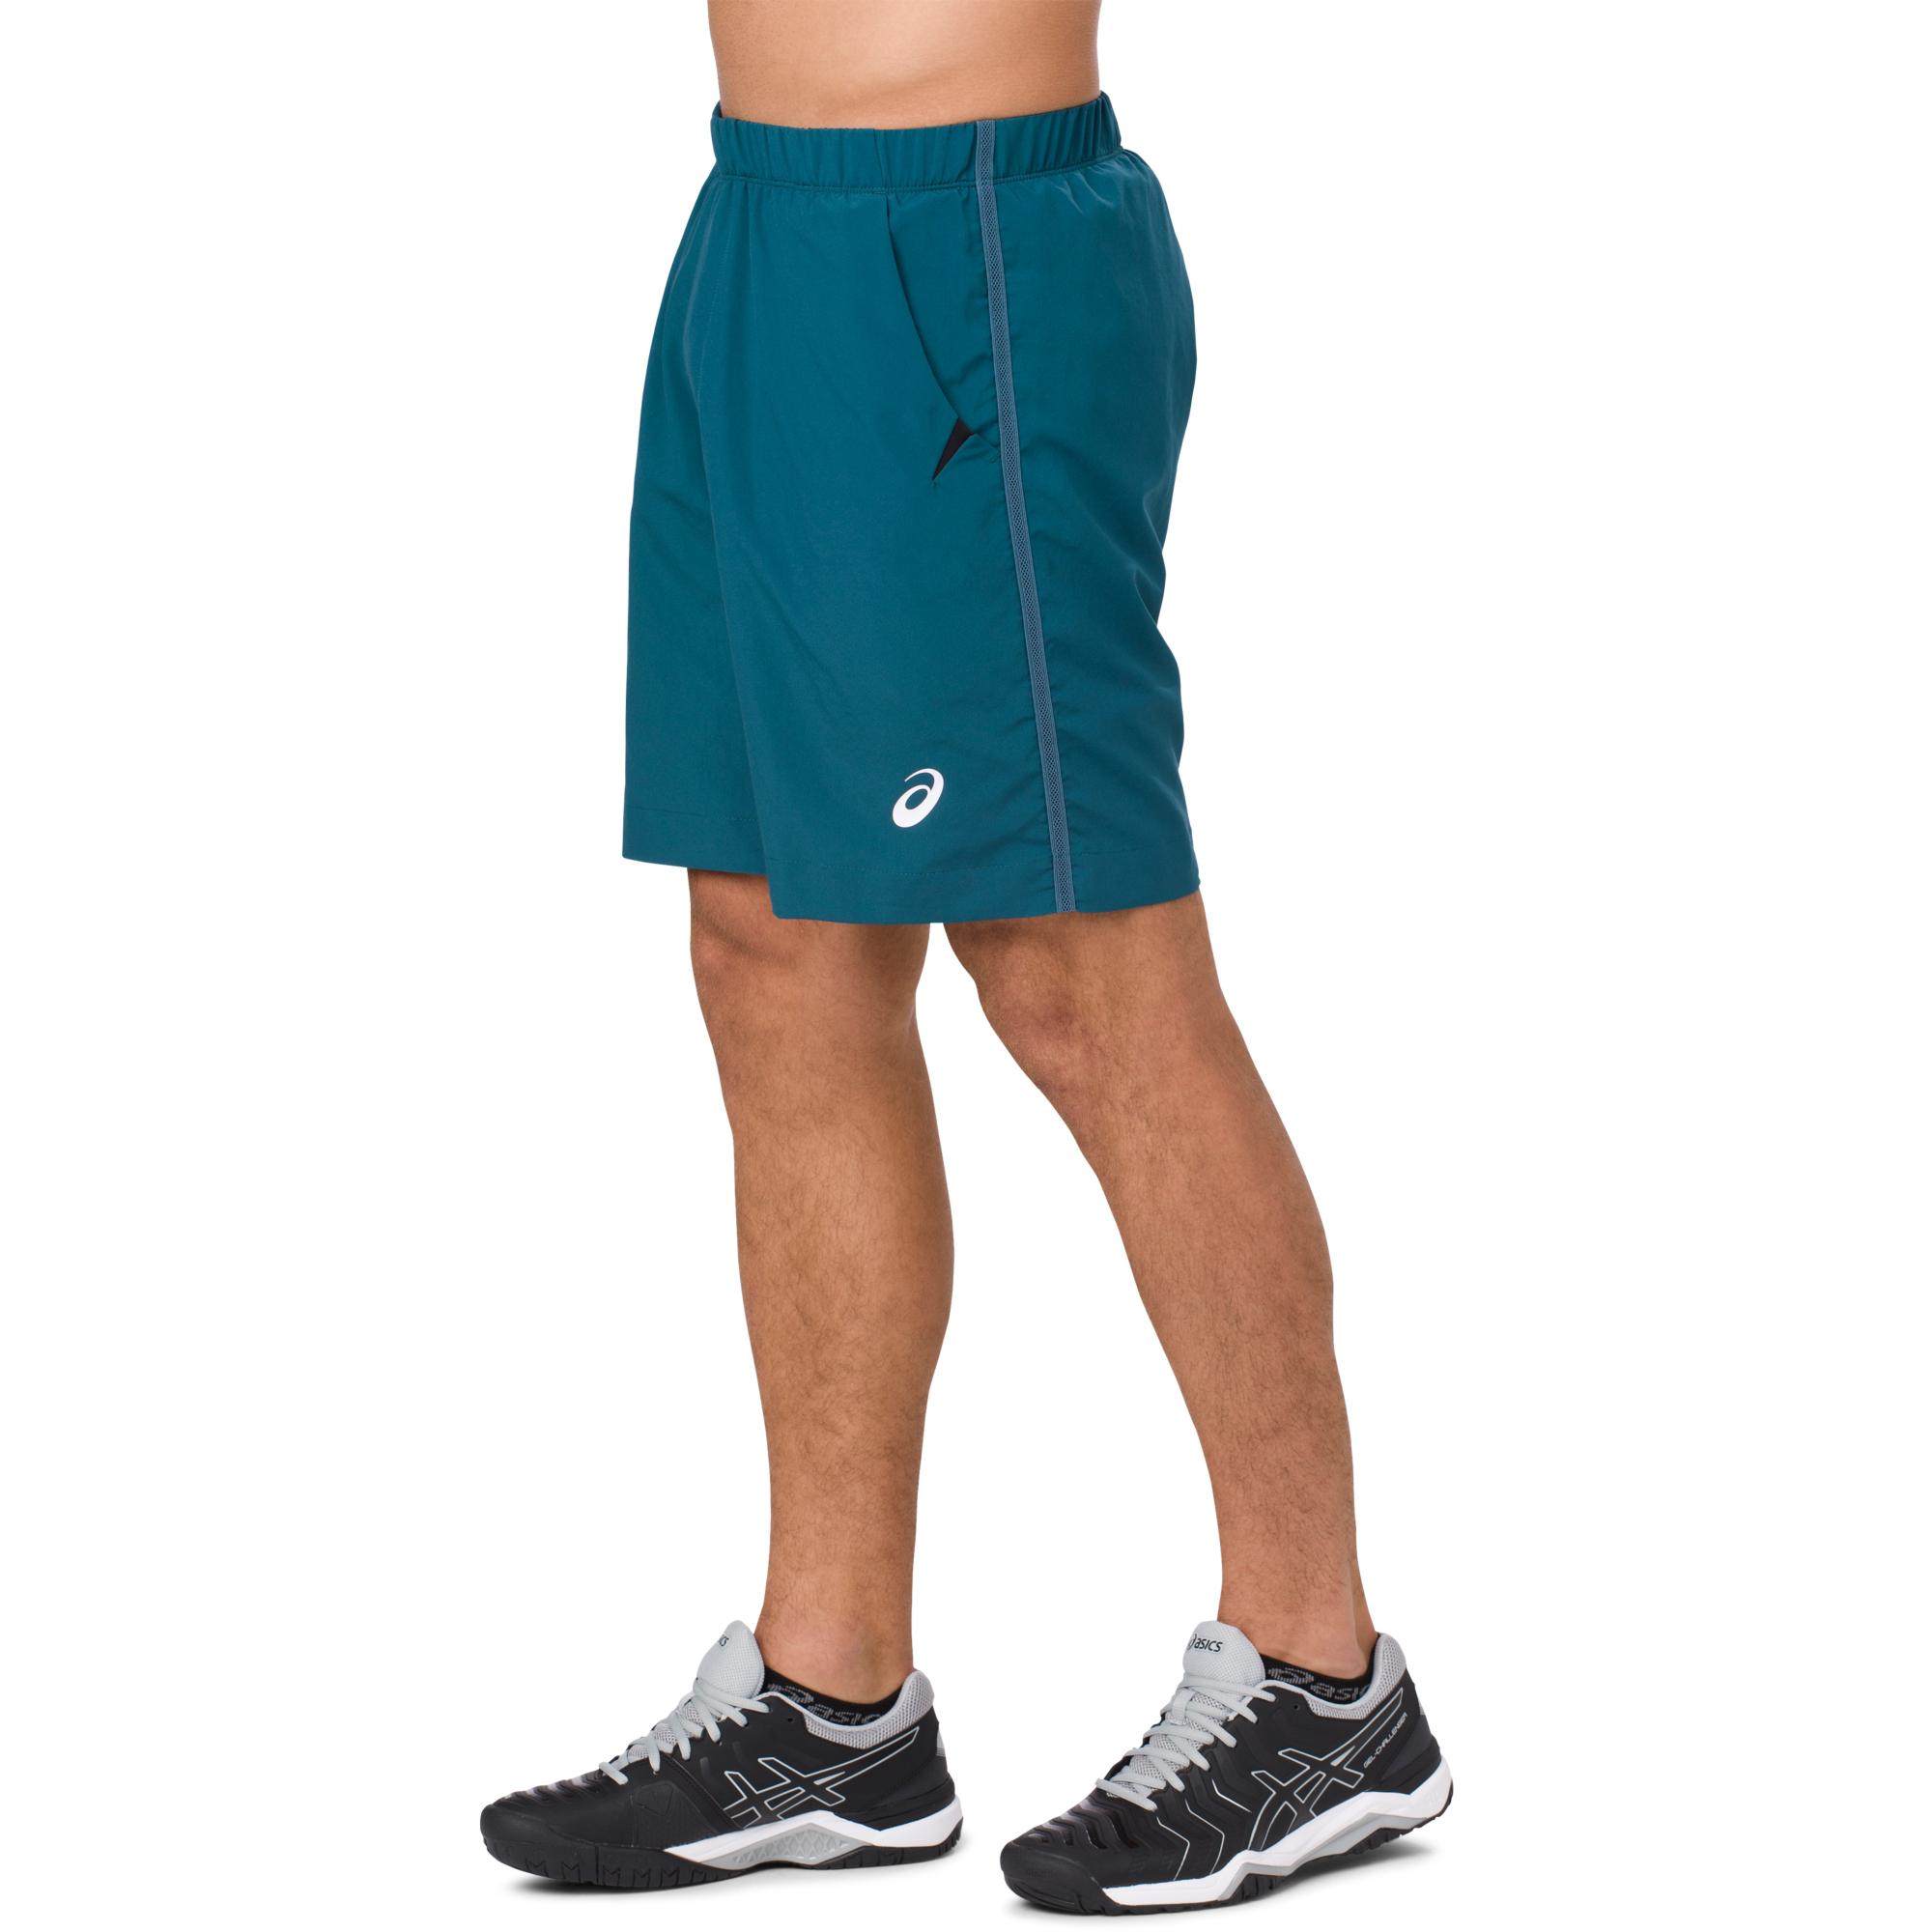 Asics Mens Tennis Shorts - Blue Steel - Tennisnuts.com